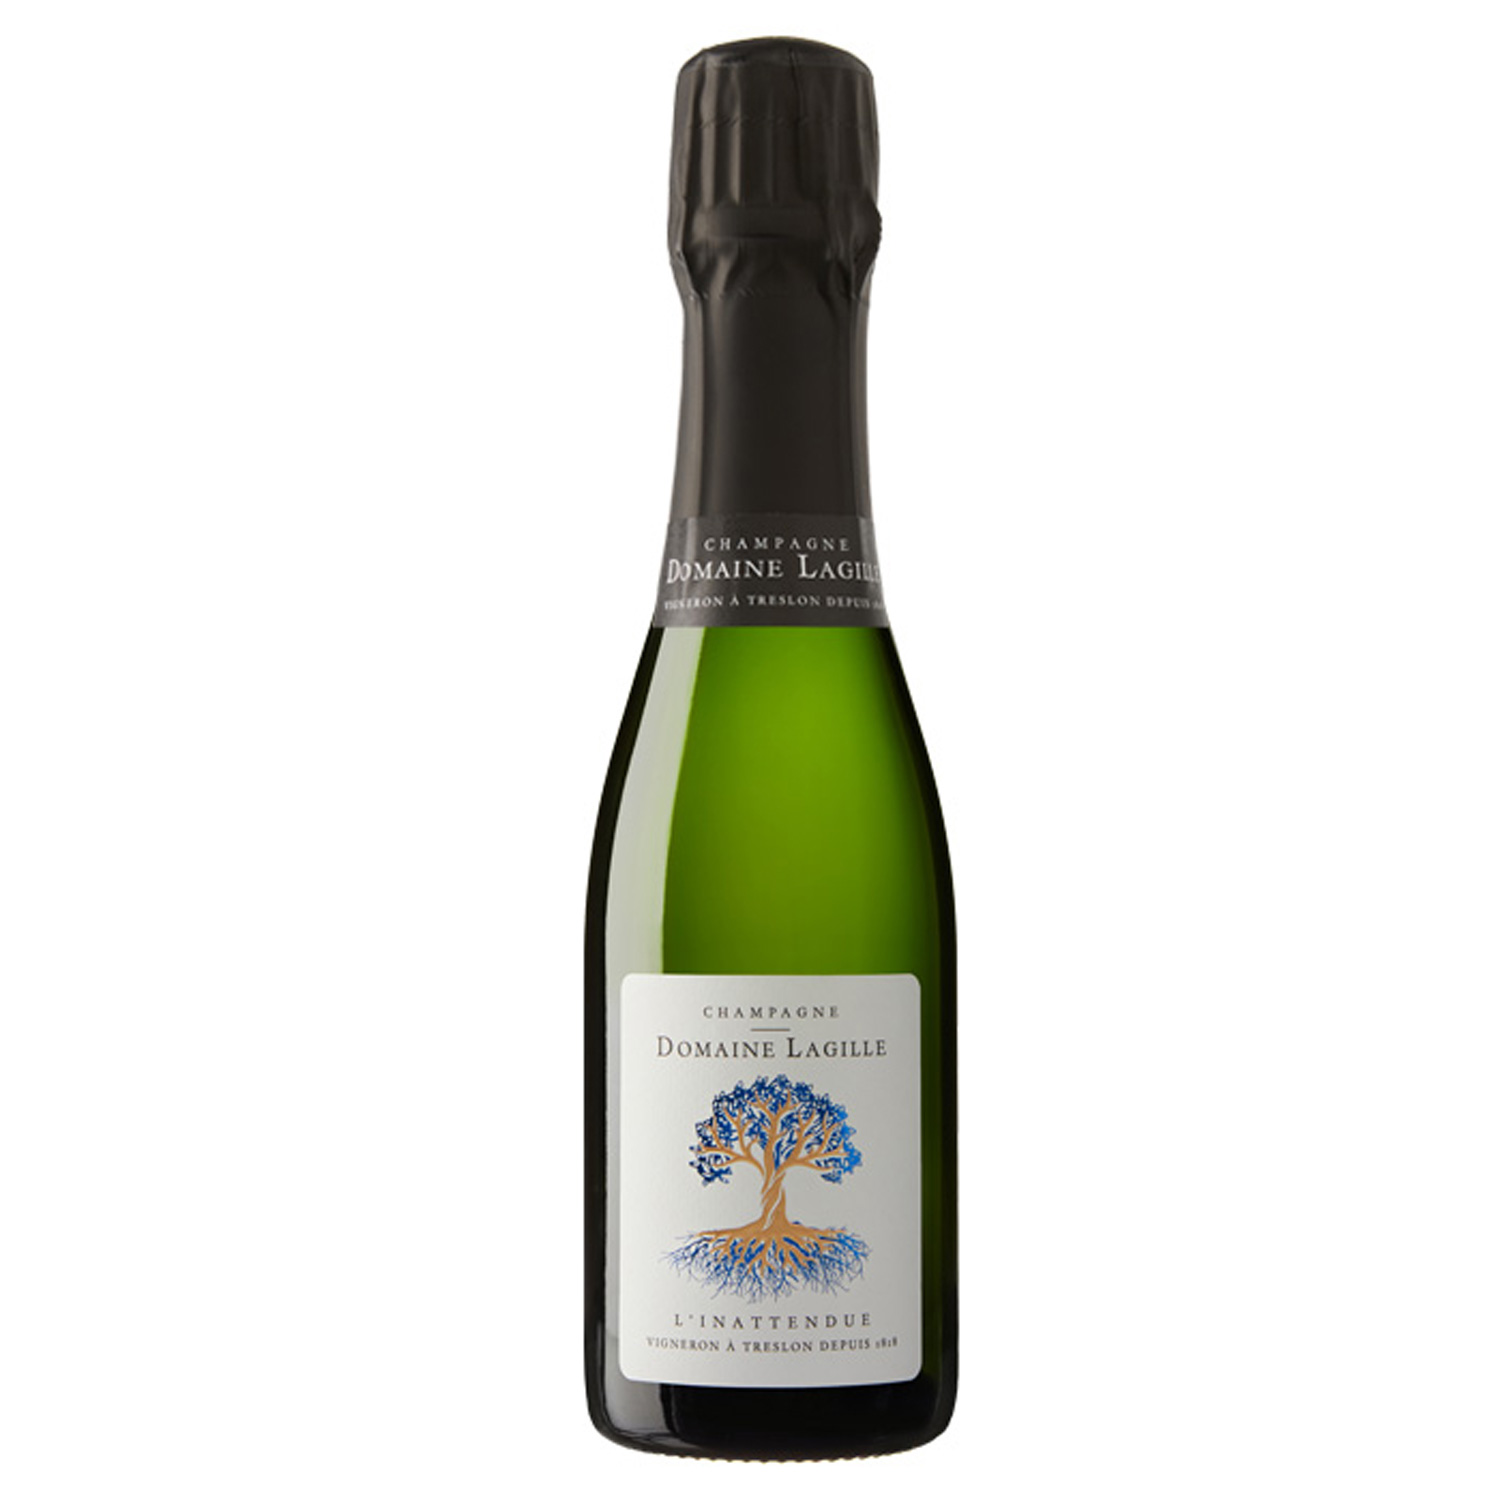 Champagne Domaine Lagille  L'Inattendue - Brut - 0,375L